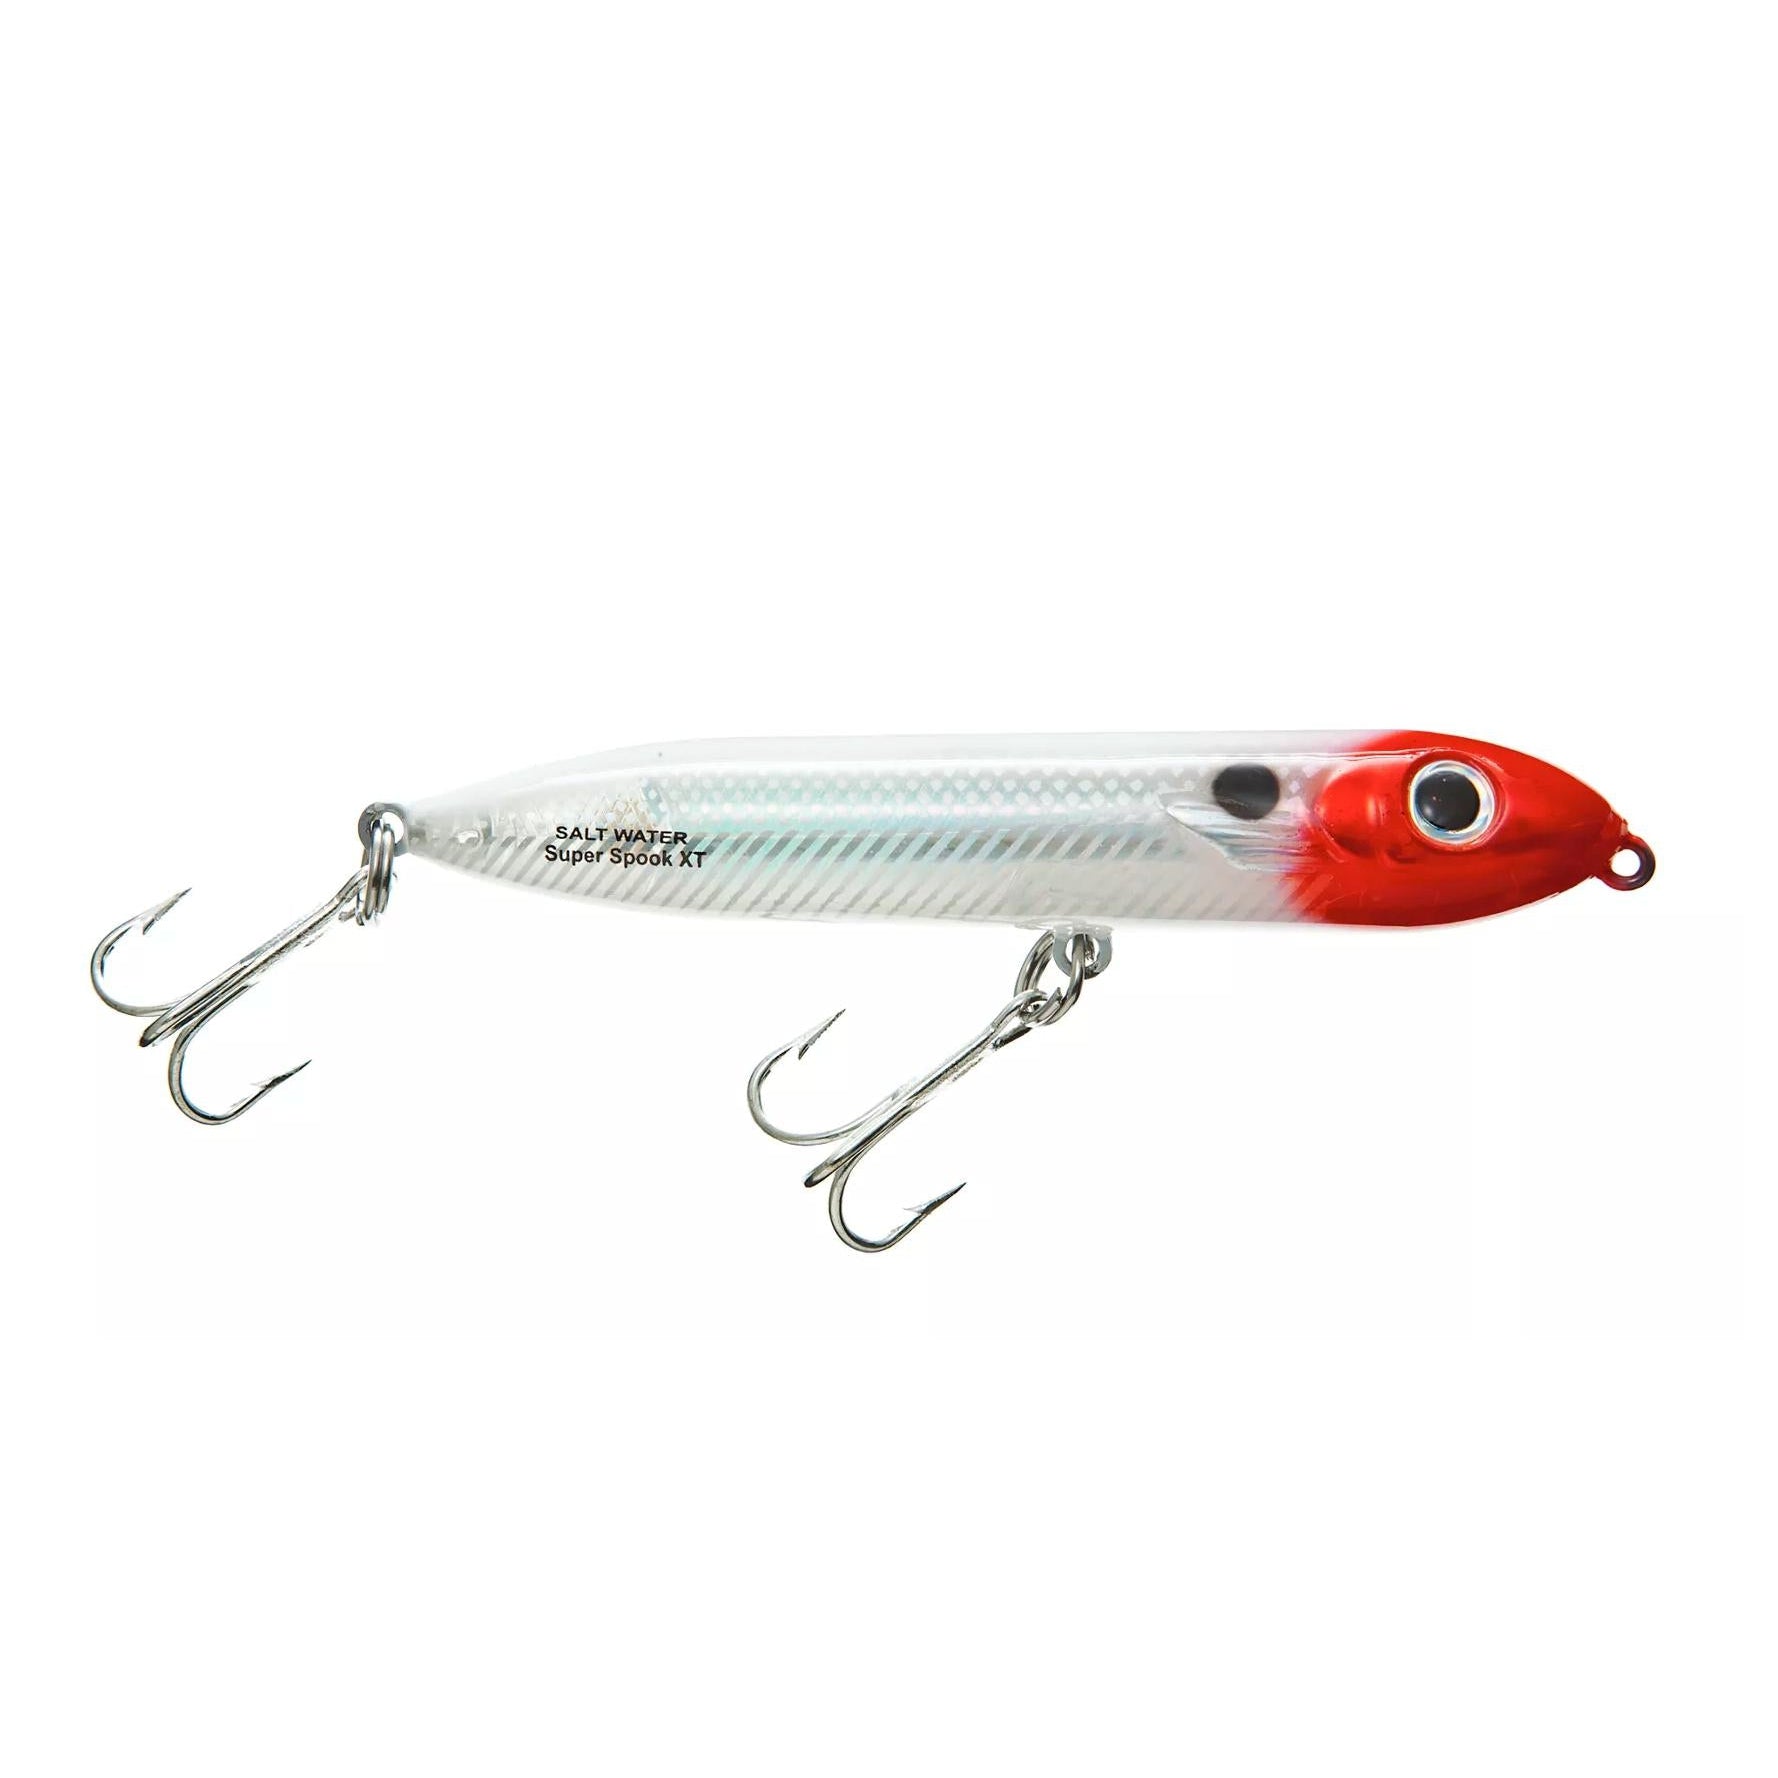 Heddon X925623 Super Zara Spook Topwater 5in Fishing Lure for sale online